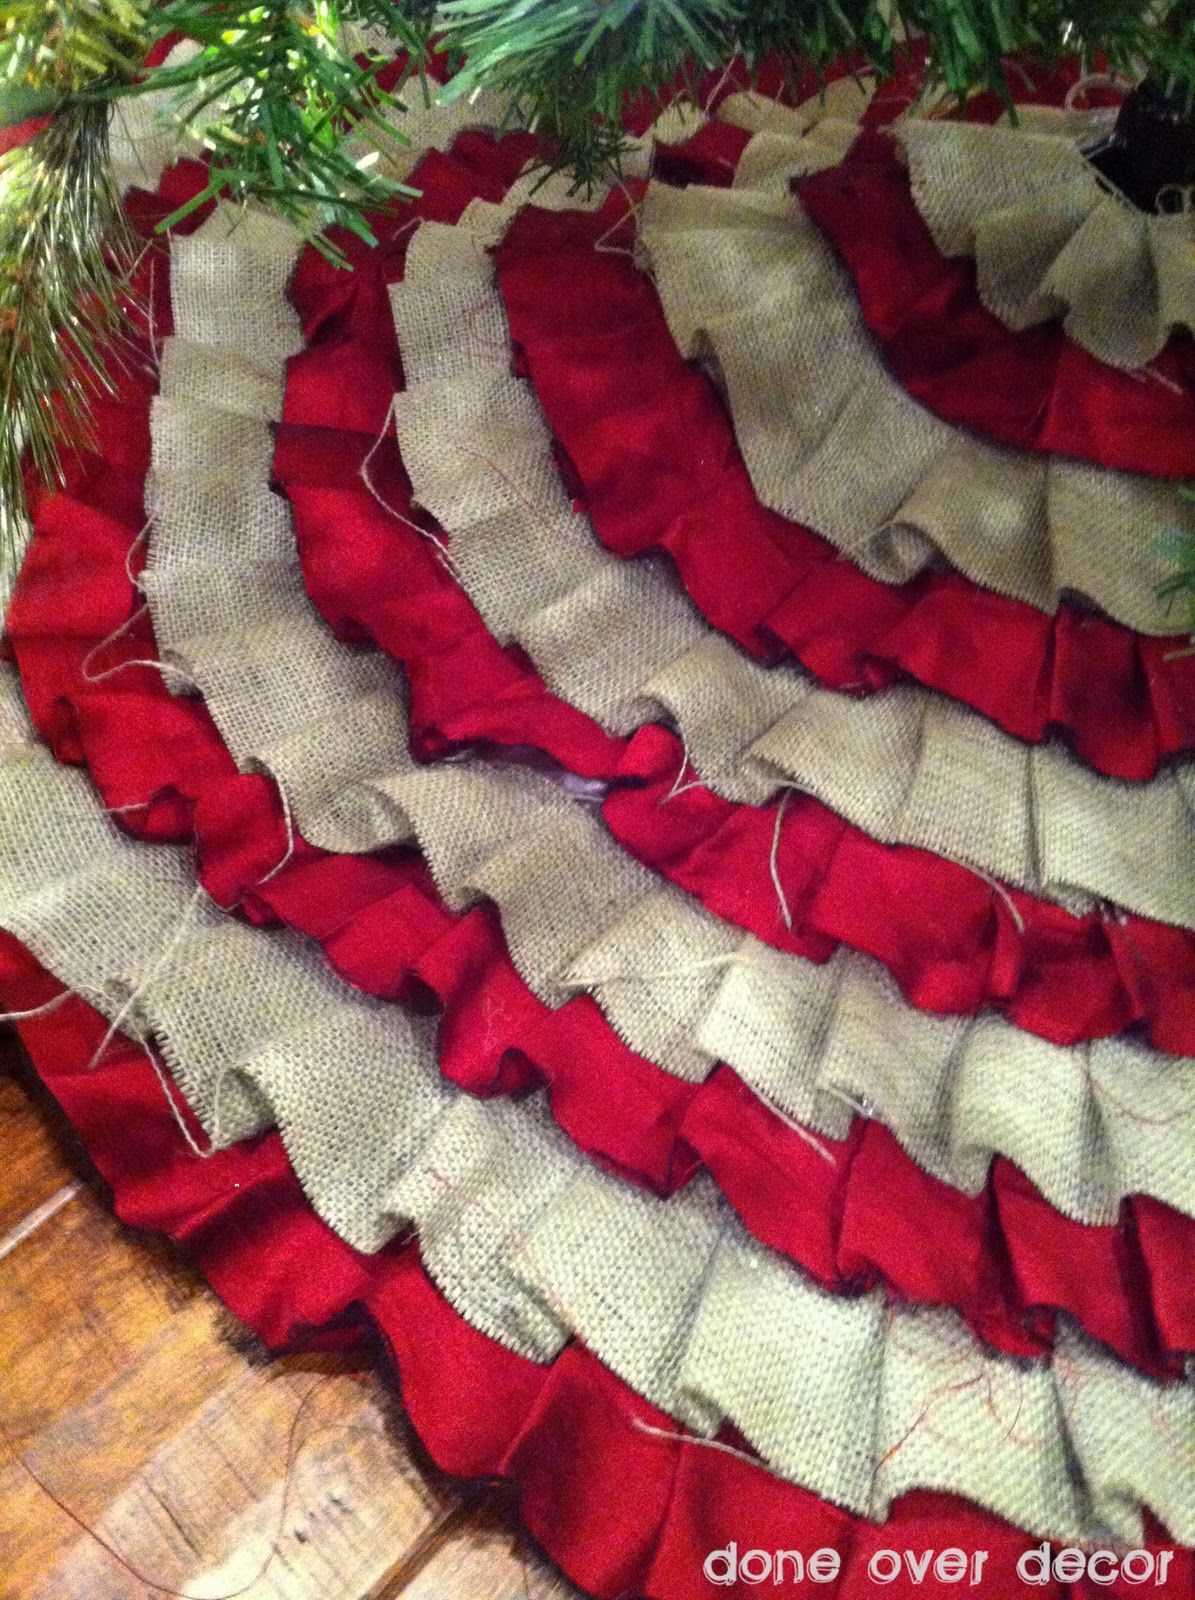 DIY Ruffle Tree Skirt – No sewing! Rustic chic!